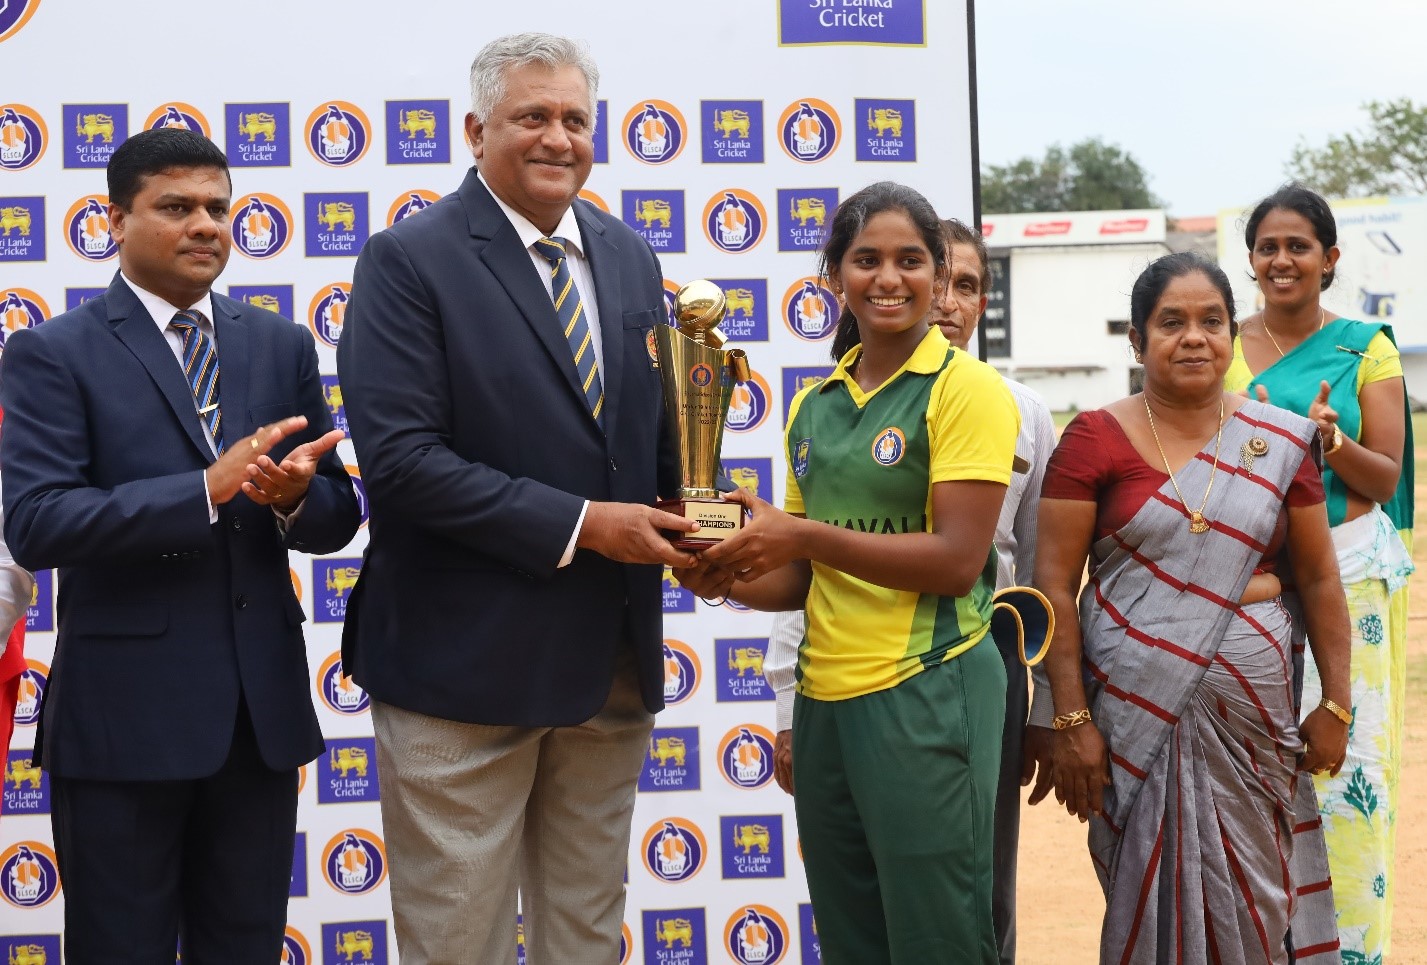 U19 Girls Cricket Tournament